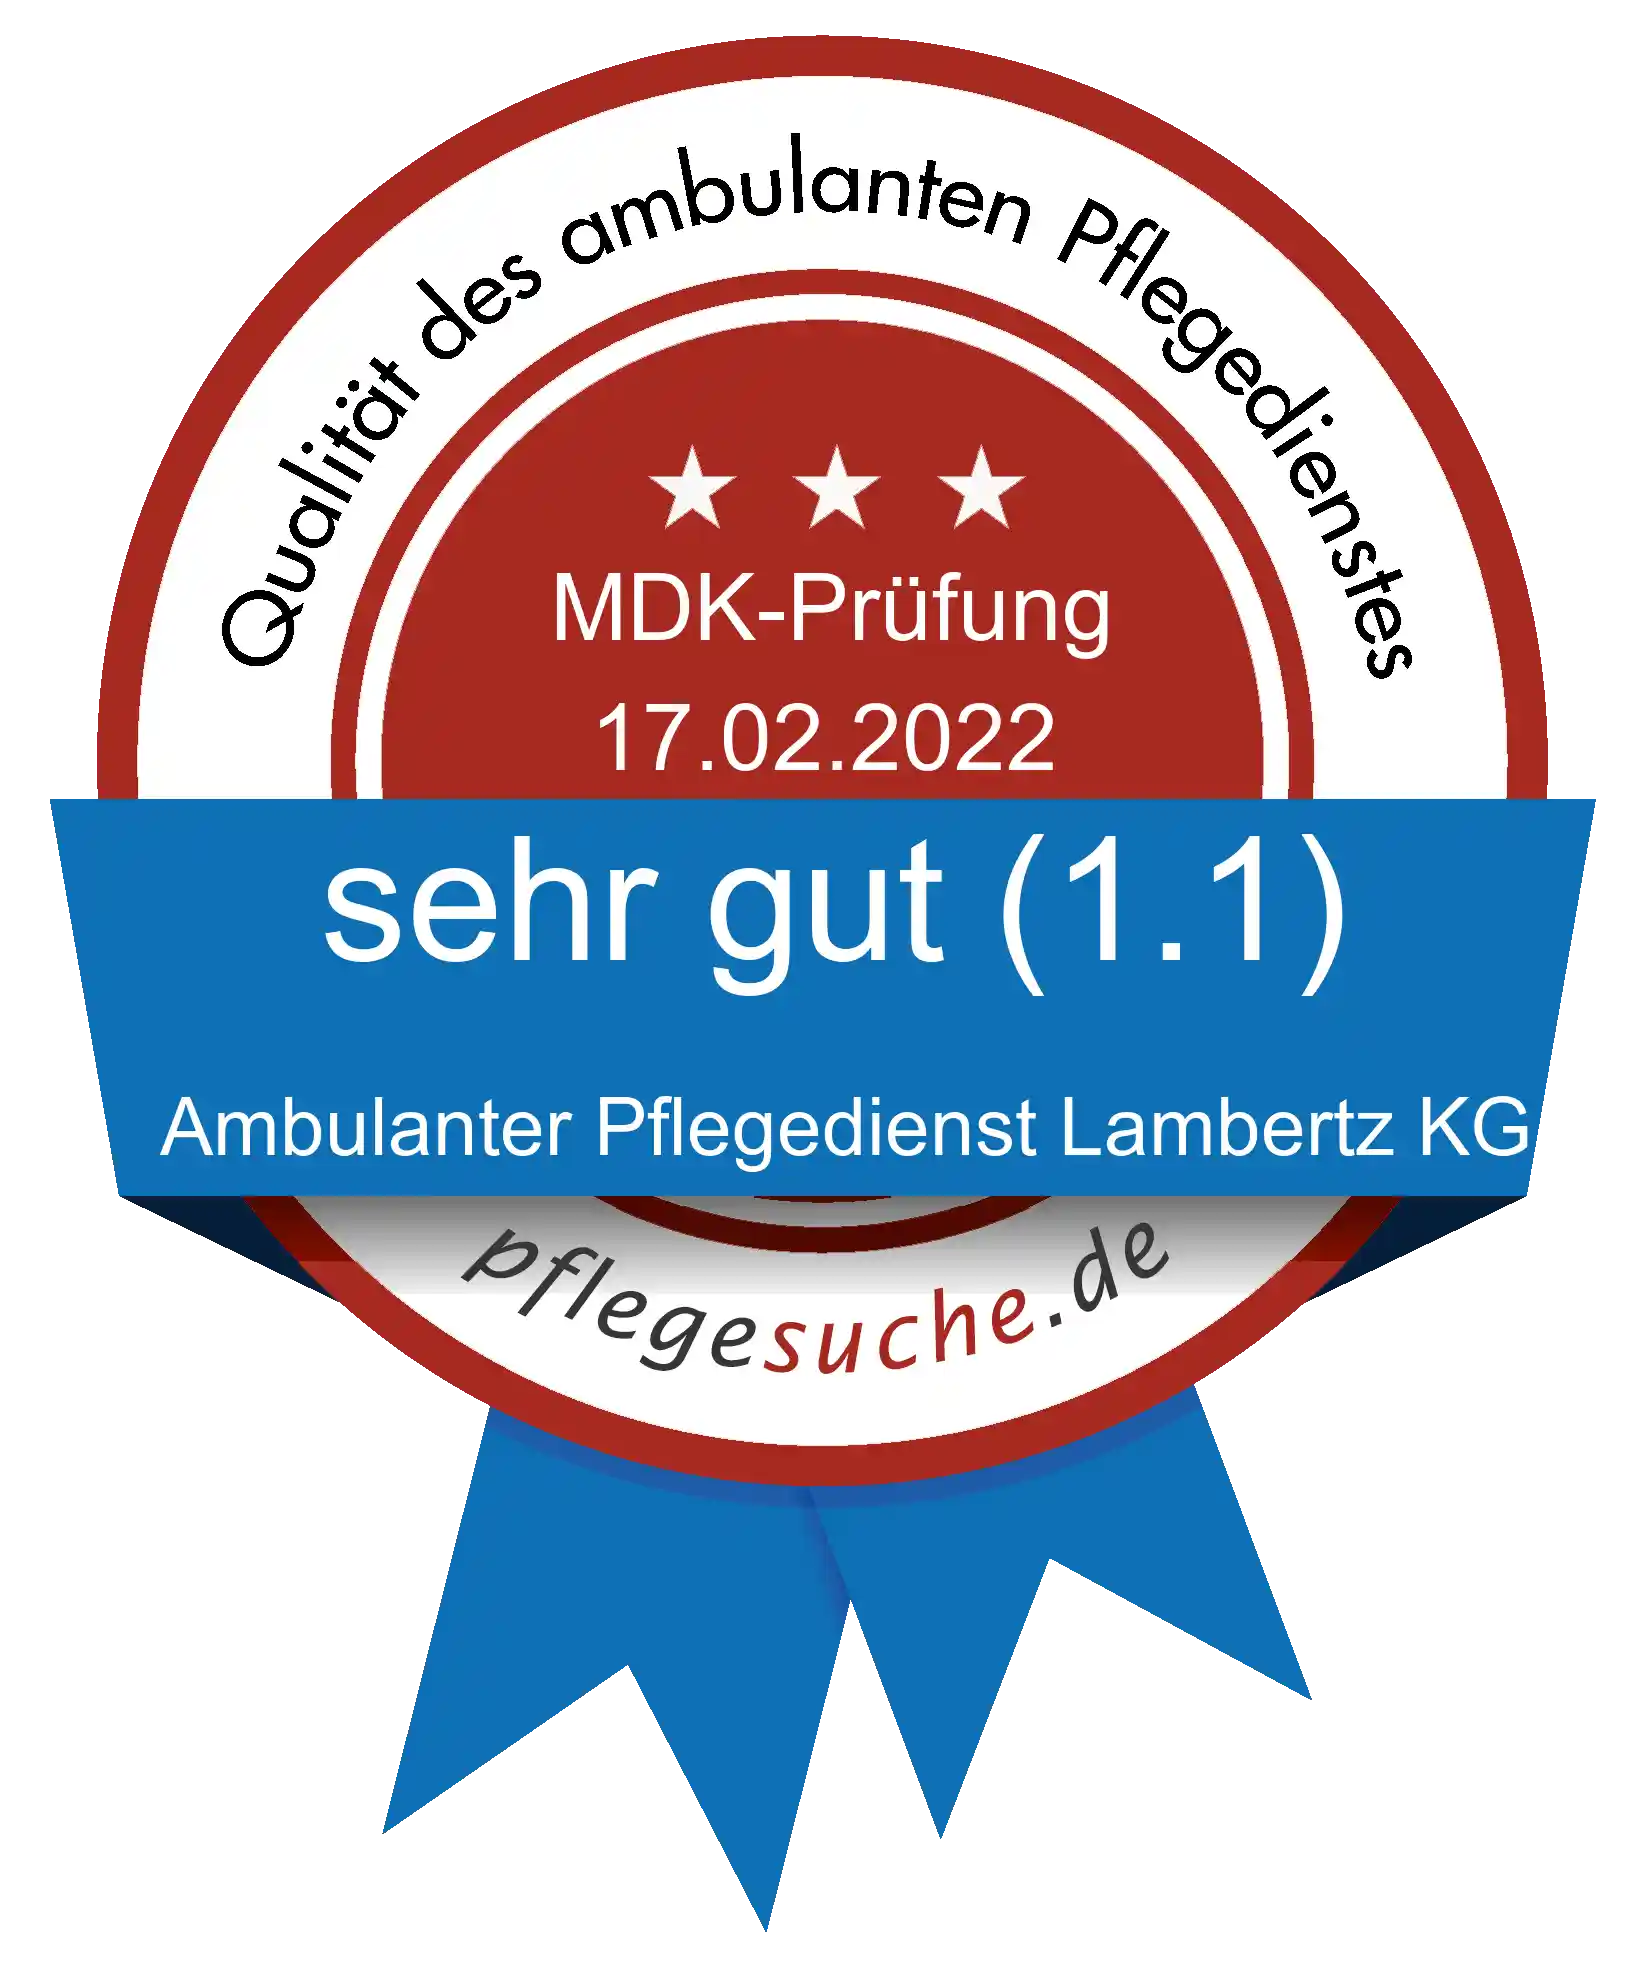 Siegel Benotung: Ambulanter Pflegedienst Lambertz KG